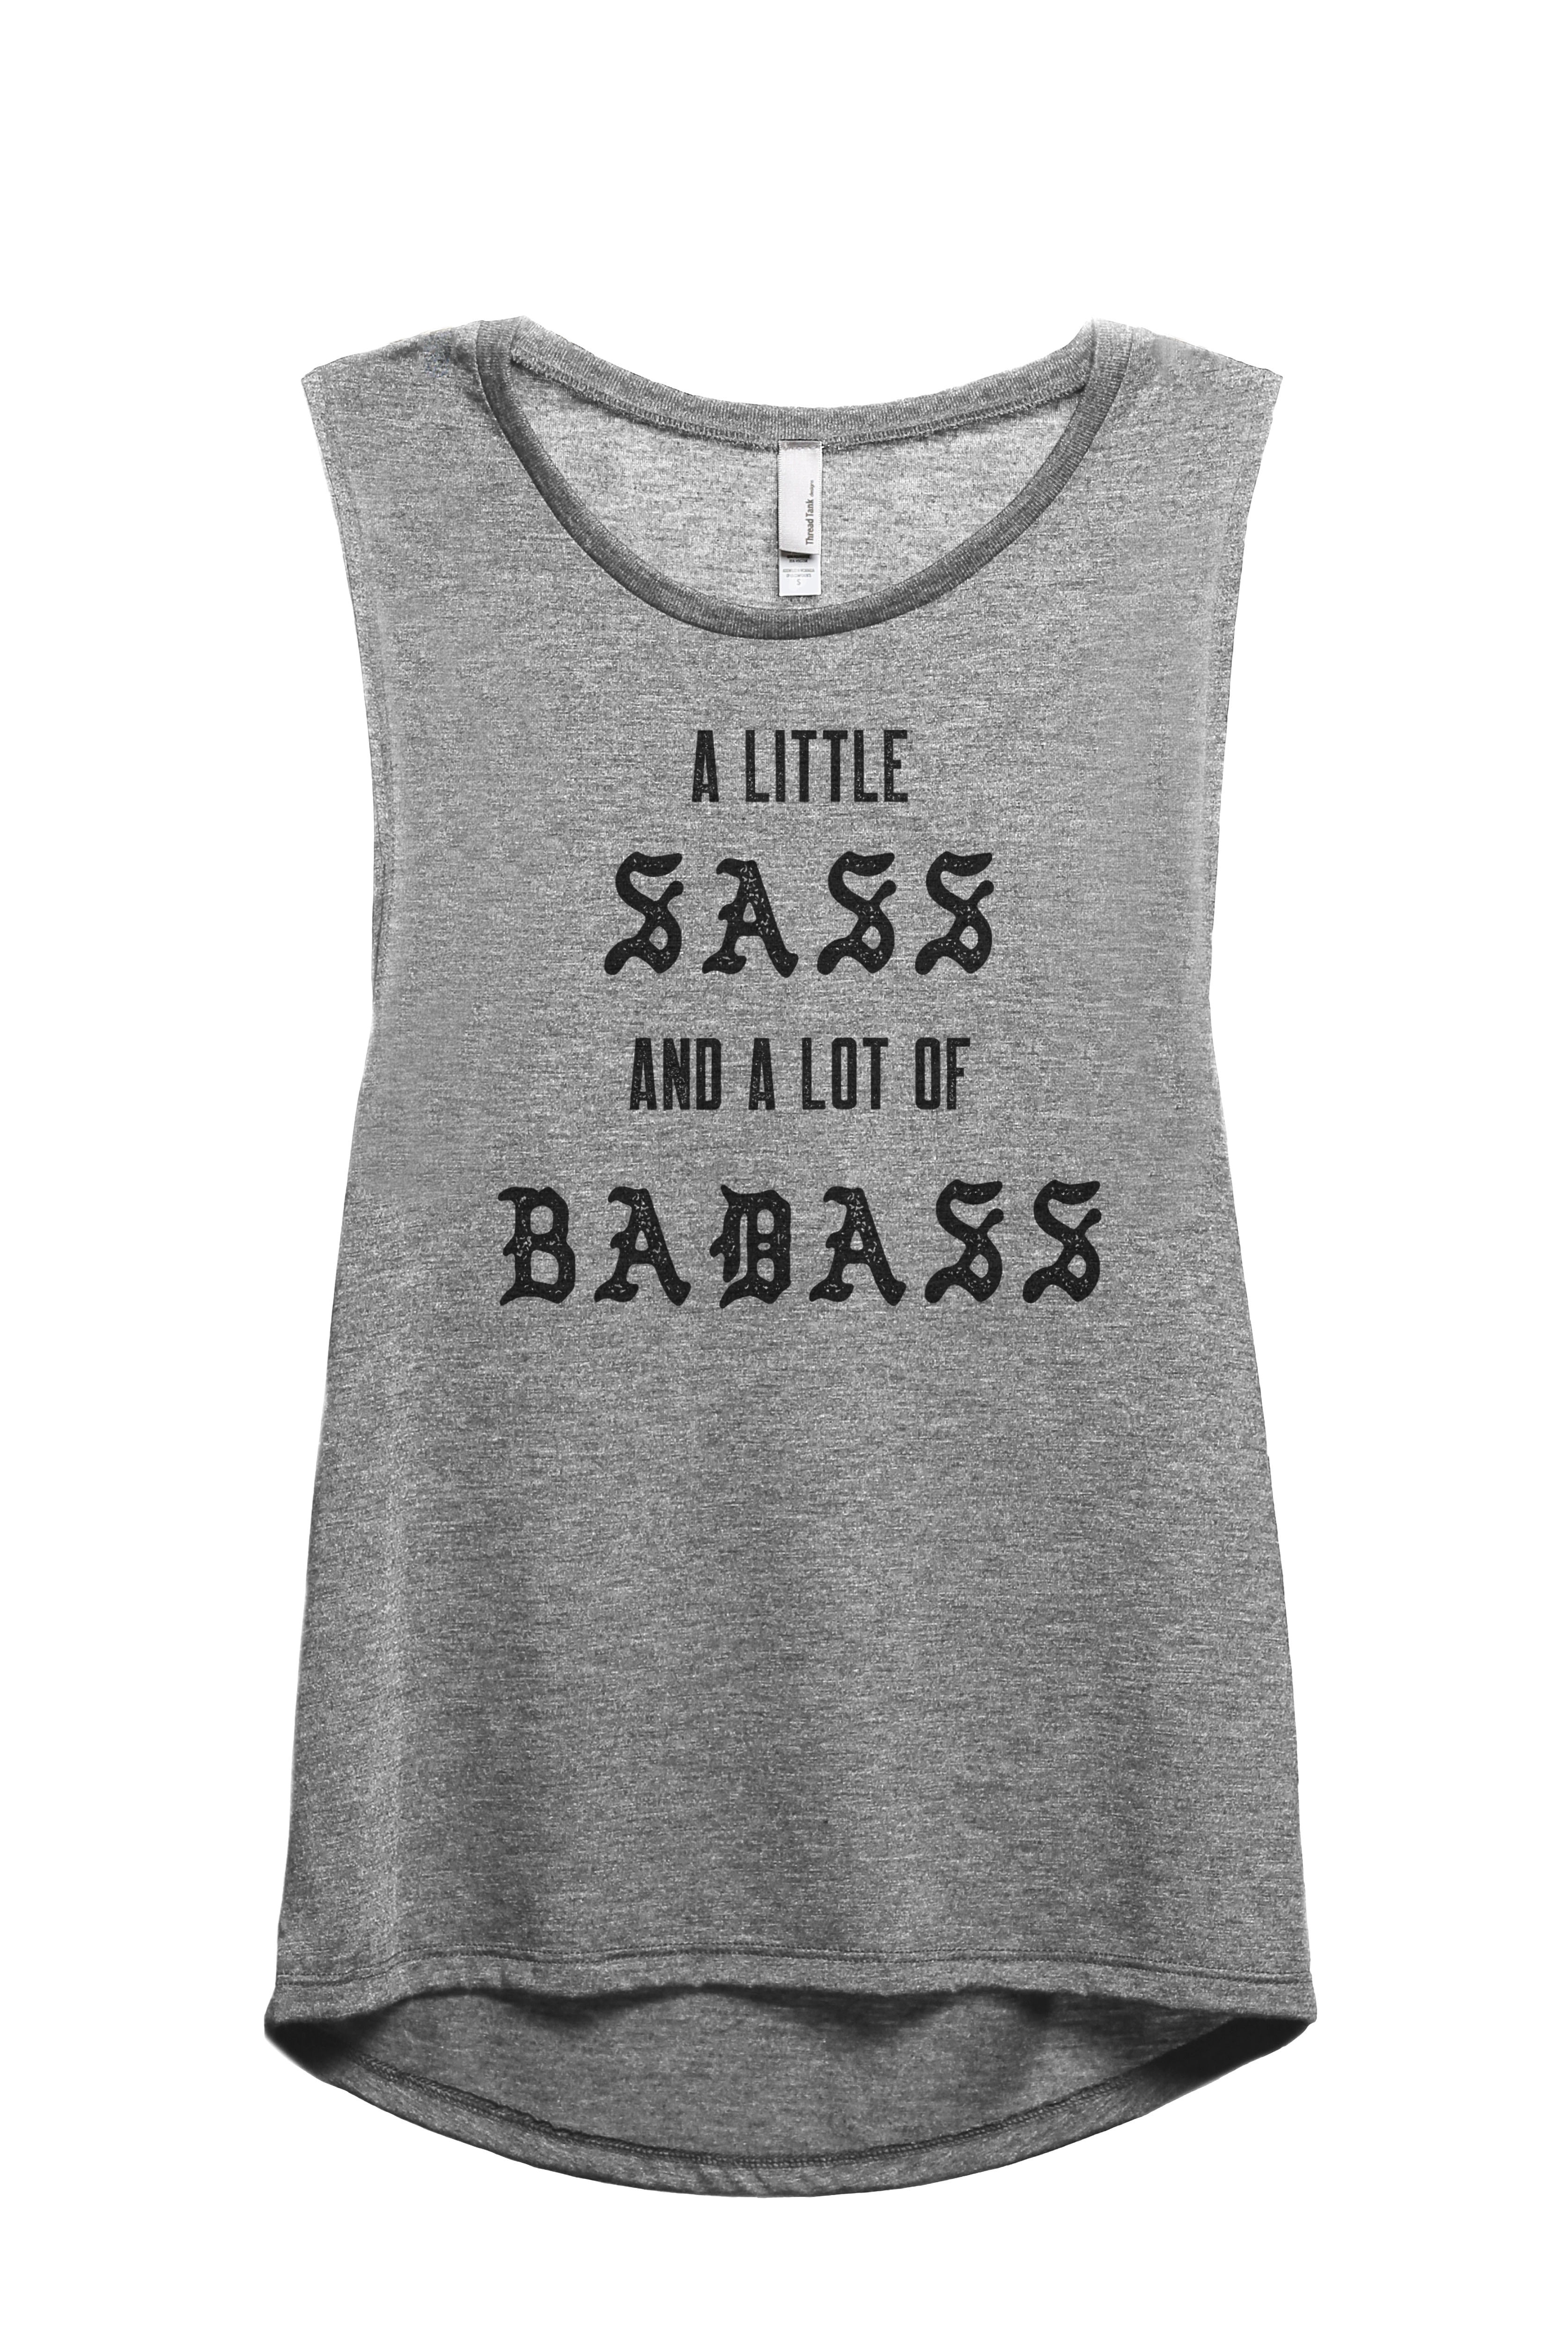 A Little Sass And A Lot Of Badass Women's Fashion Sleeveless Muscle Workout  Yoga Tank Top Heather Grey Grey Medium